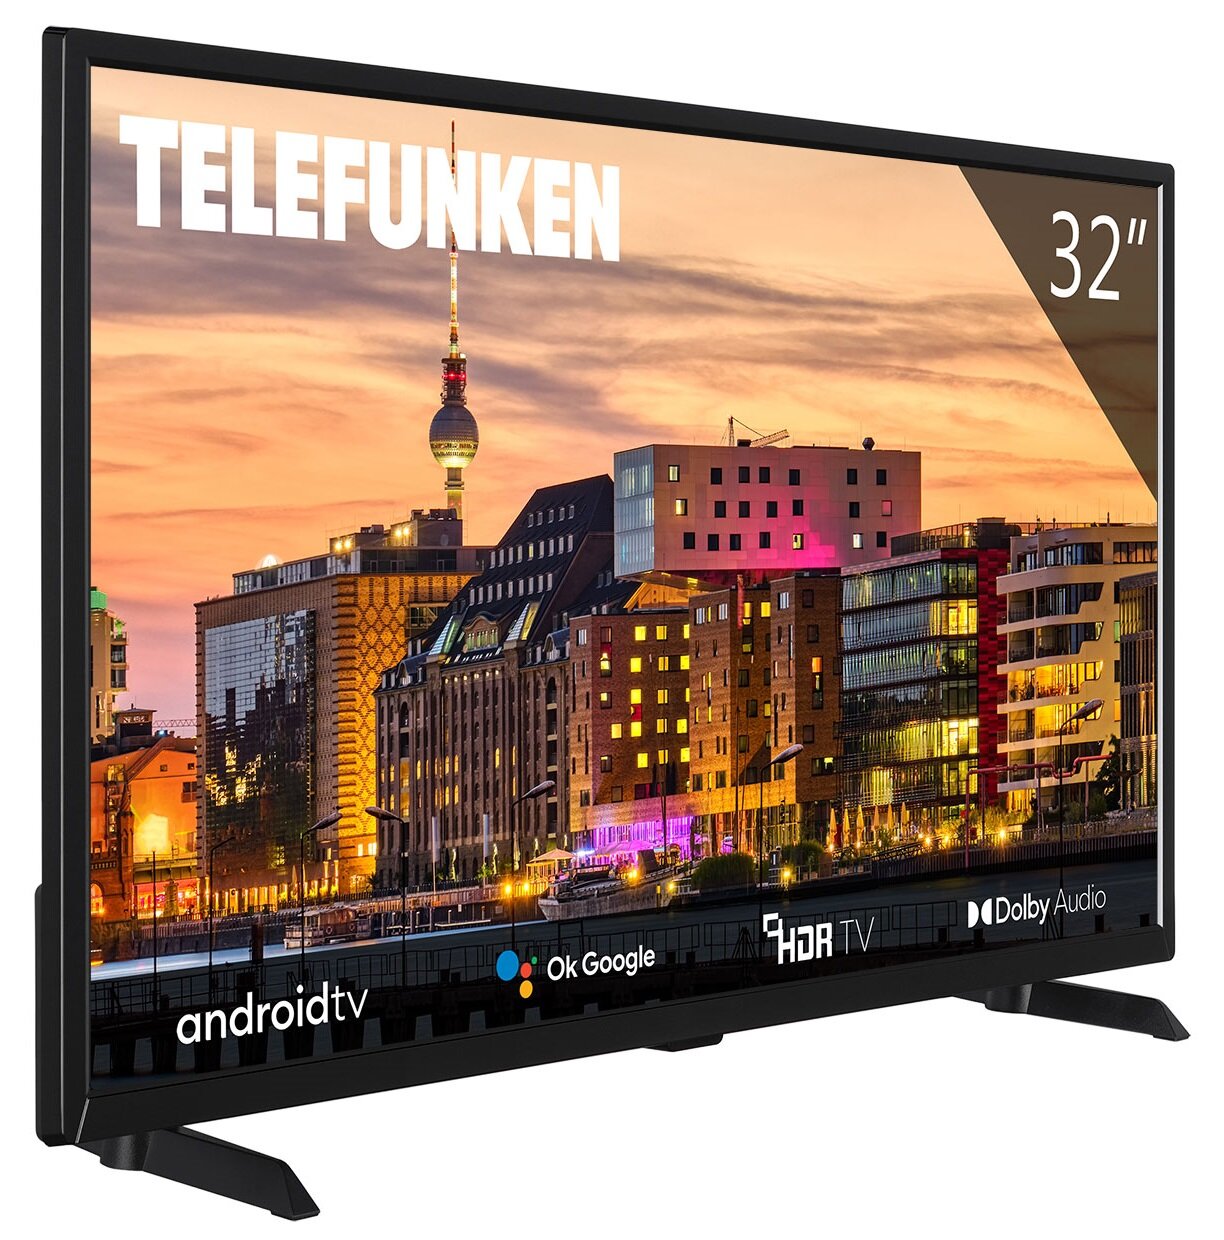 Telefunken 32hg8450 32 Led Telewizor Niskie Ceny I Opinie W Media Expert 1520